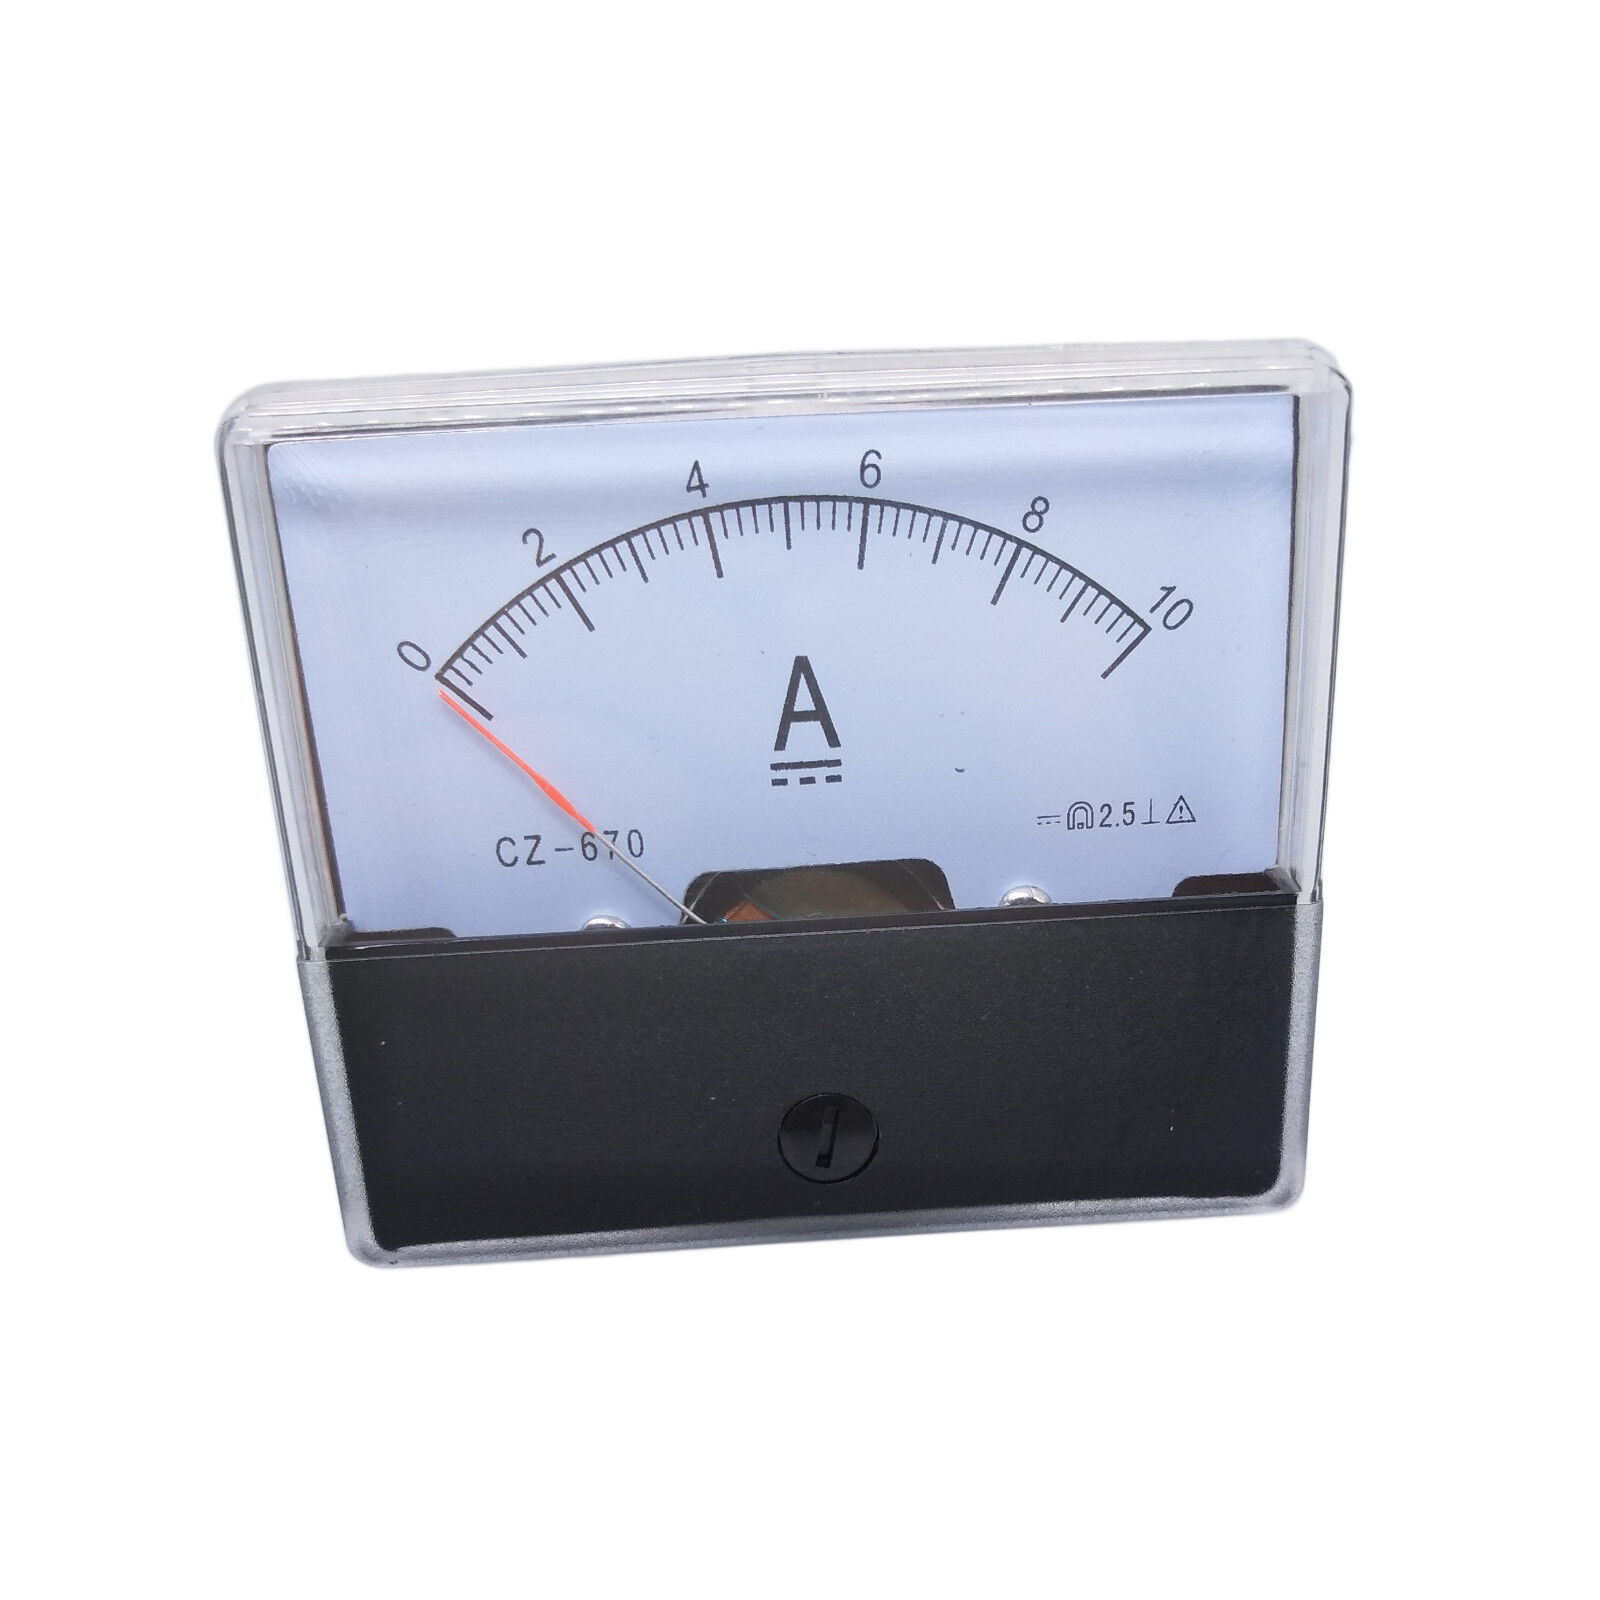 US Stock Analog Panel AMP Current Ammeter Meter Gauge DH-670 0-10A DC